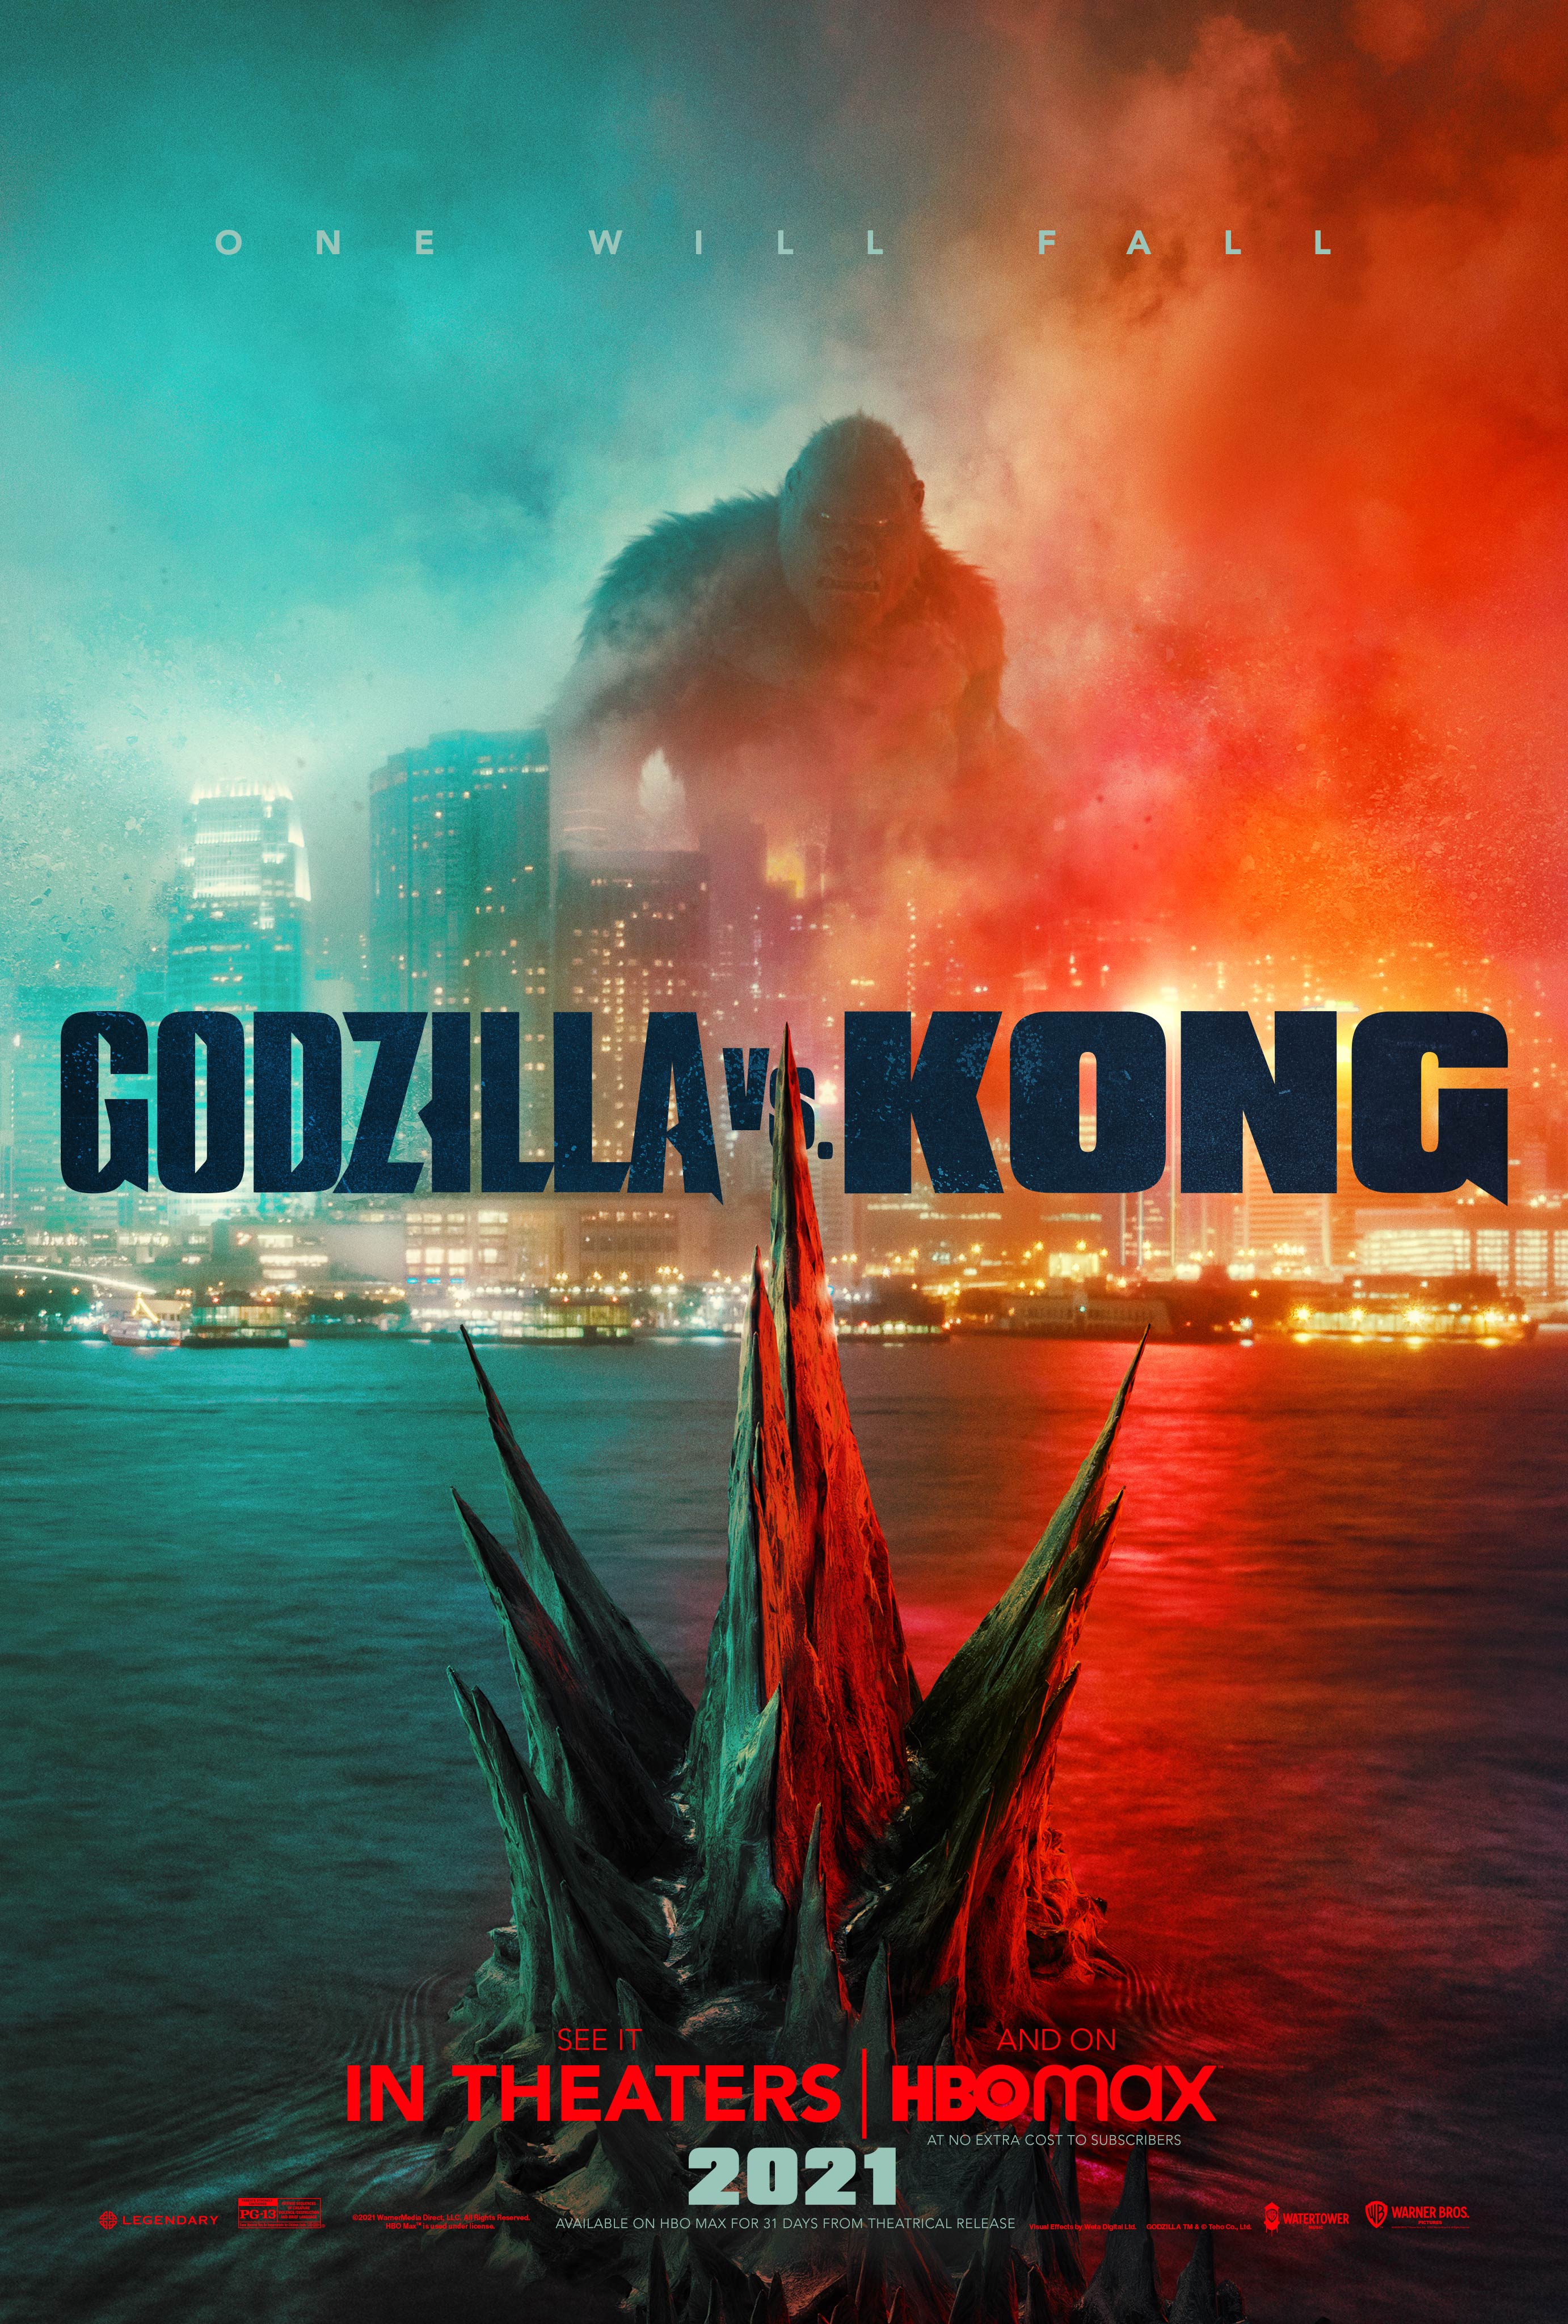 Kong Vs Godzilla 2020 Art Wallpapers